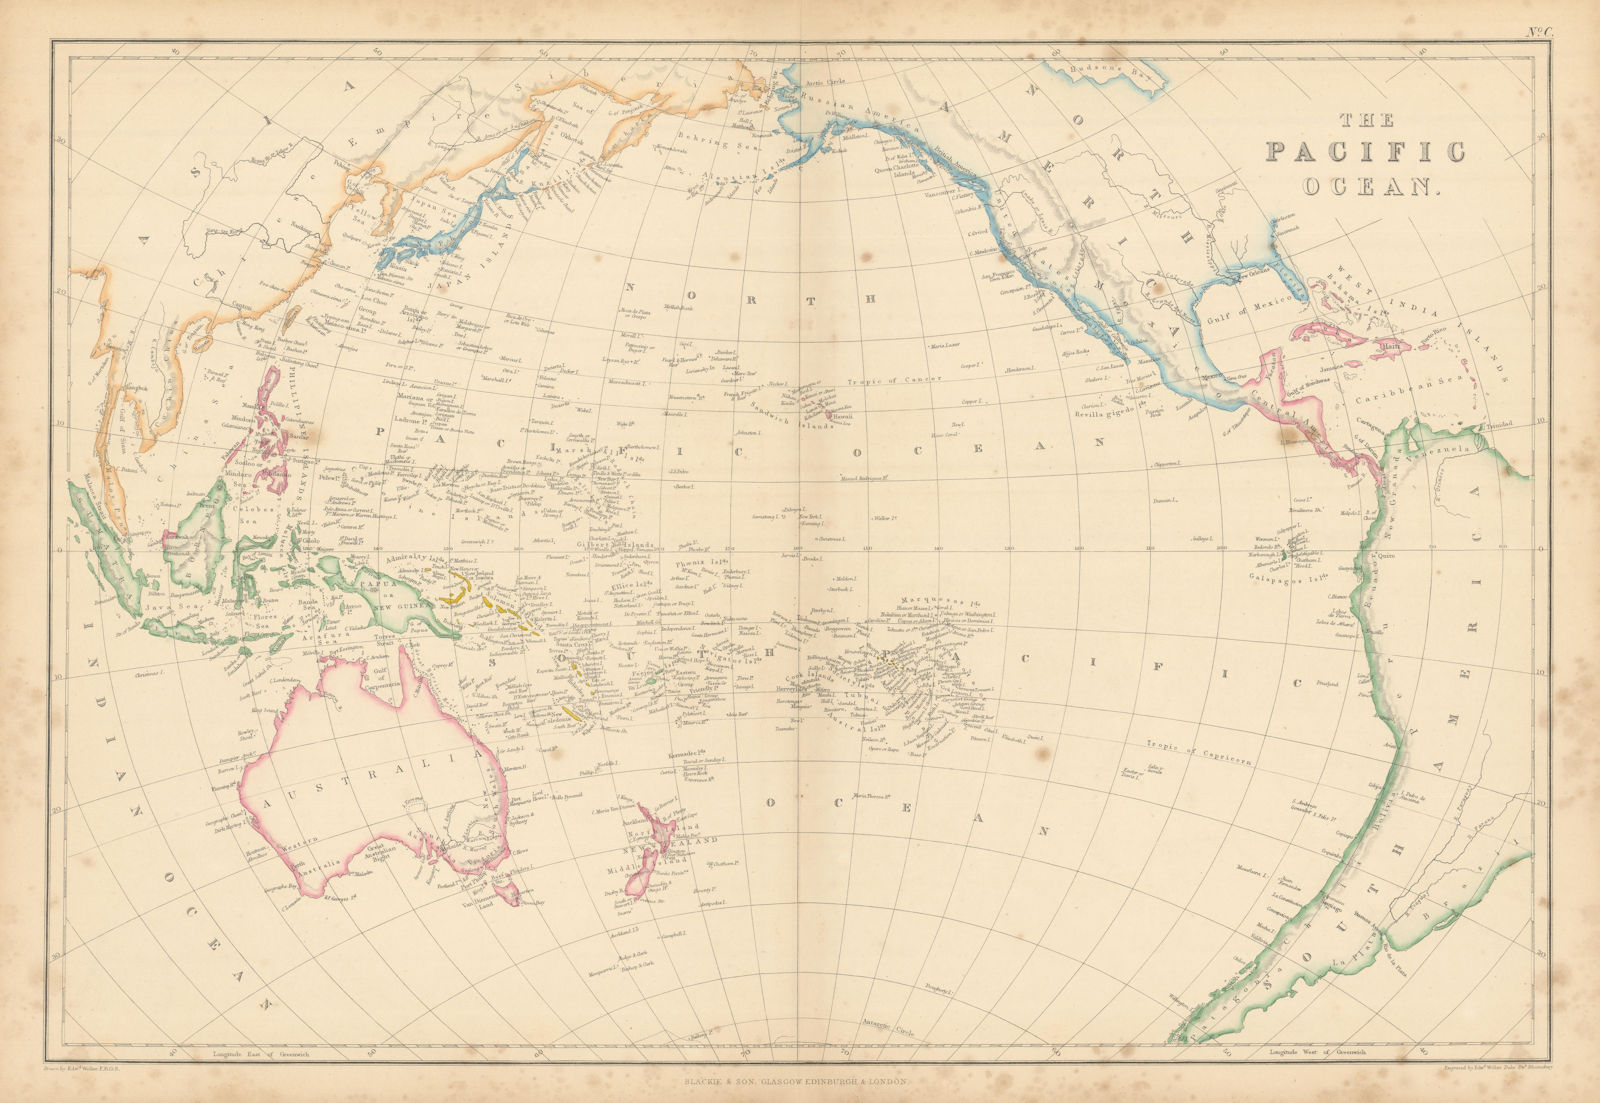 Associate Product The Pacific Ocean by Edward Weller. Polynesia Micronesia Melanesia 1859 map